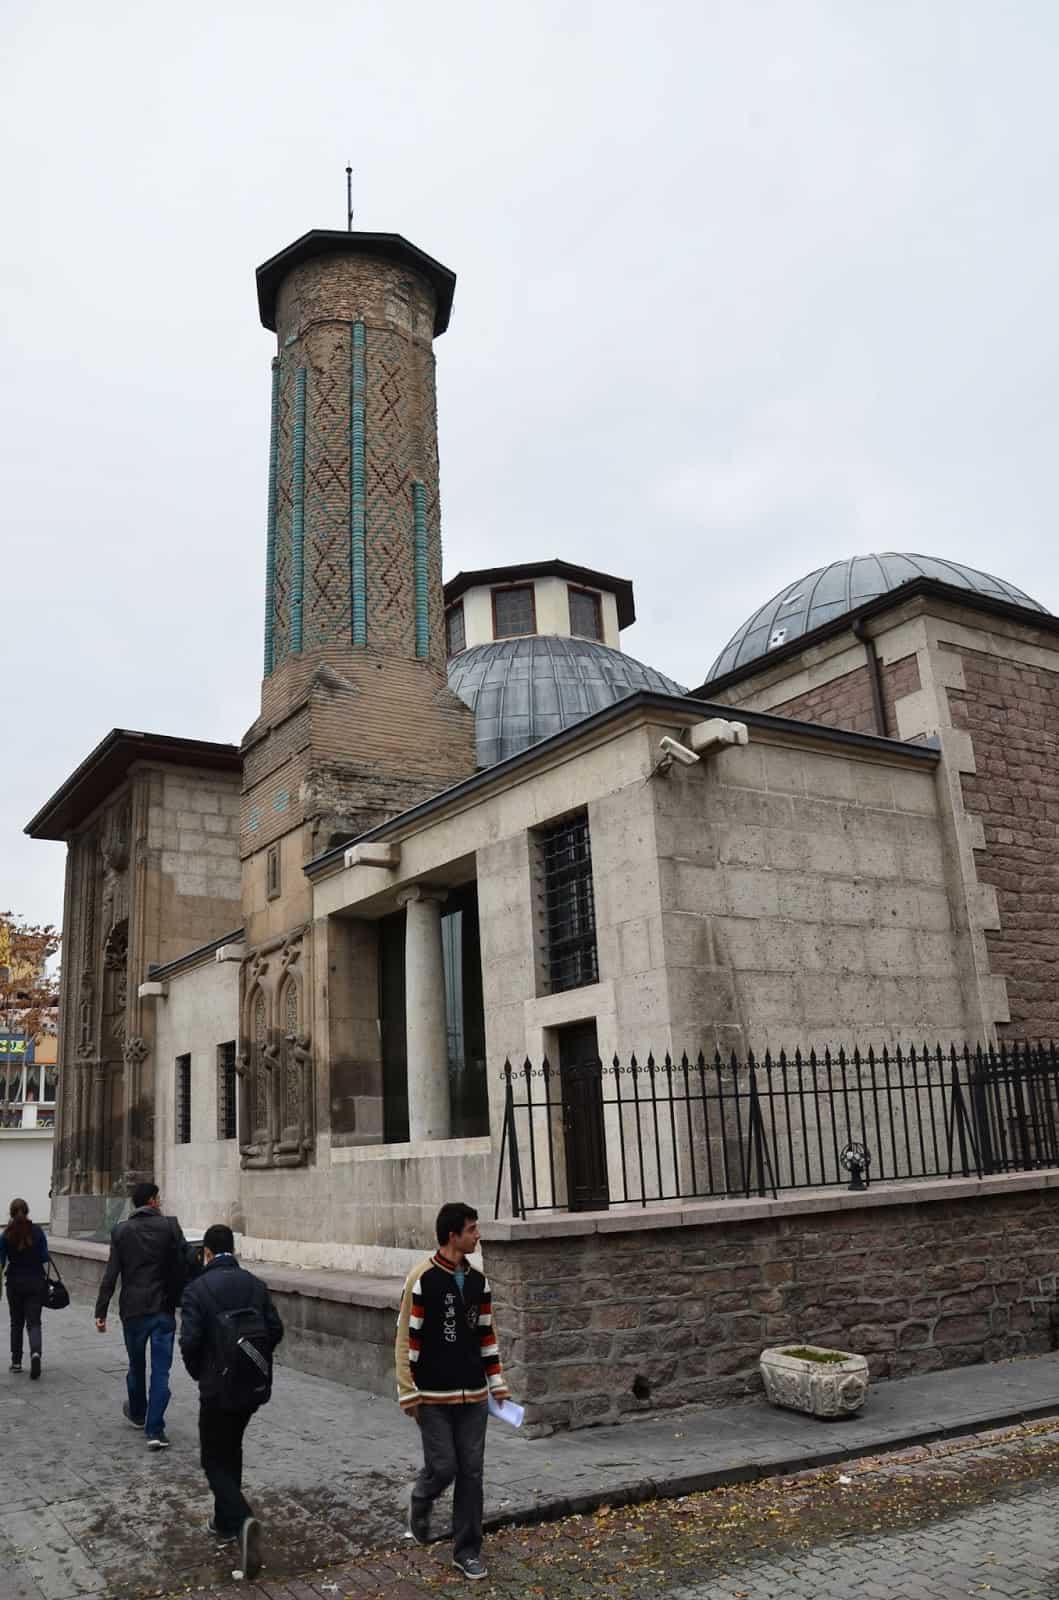 Ince Minareli Madrasa in Konya, Turkey